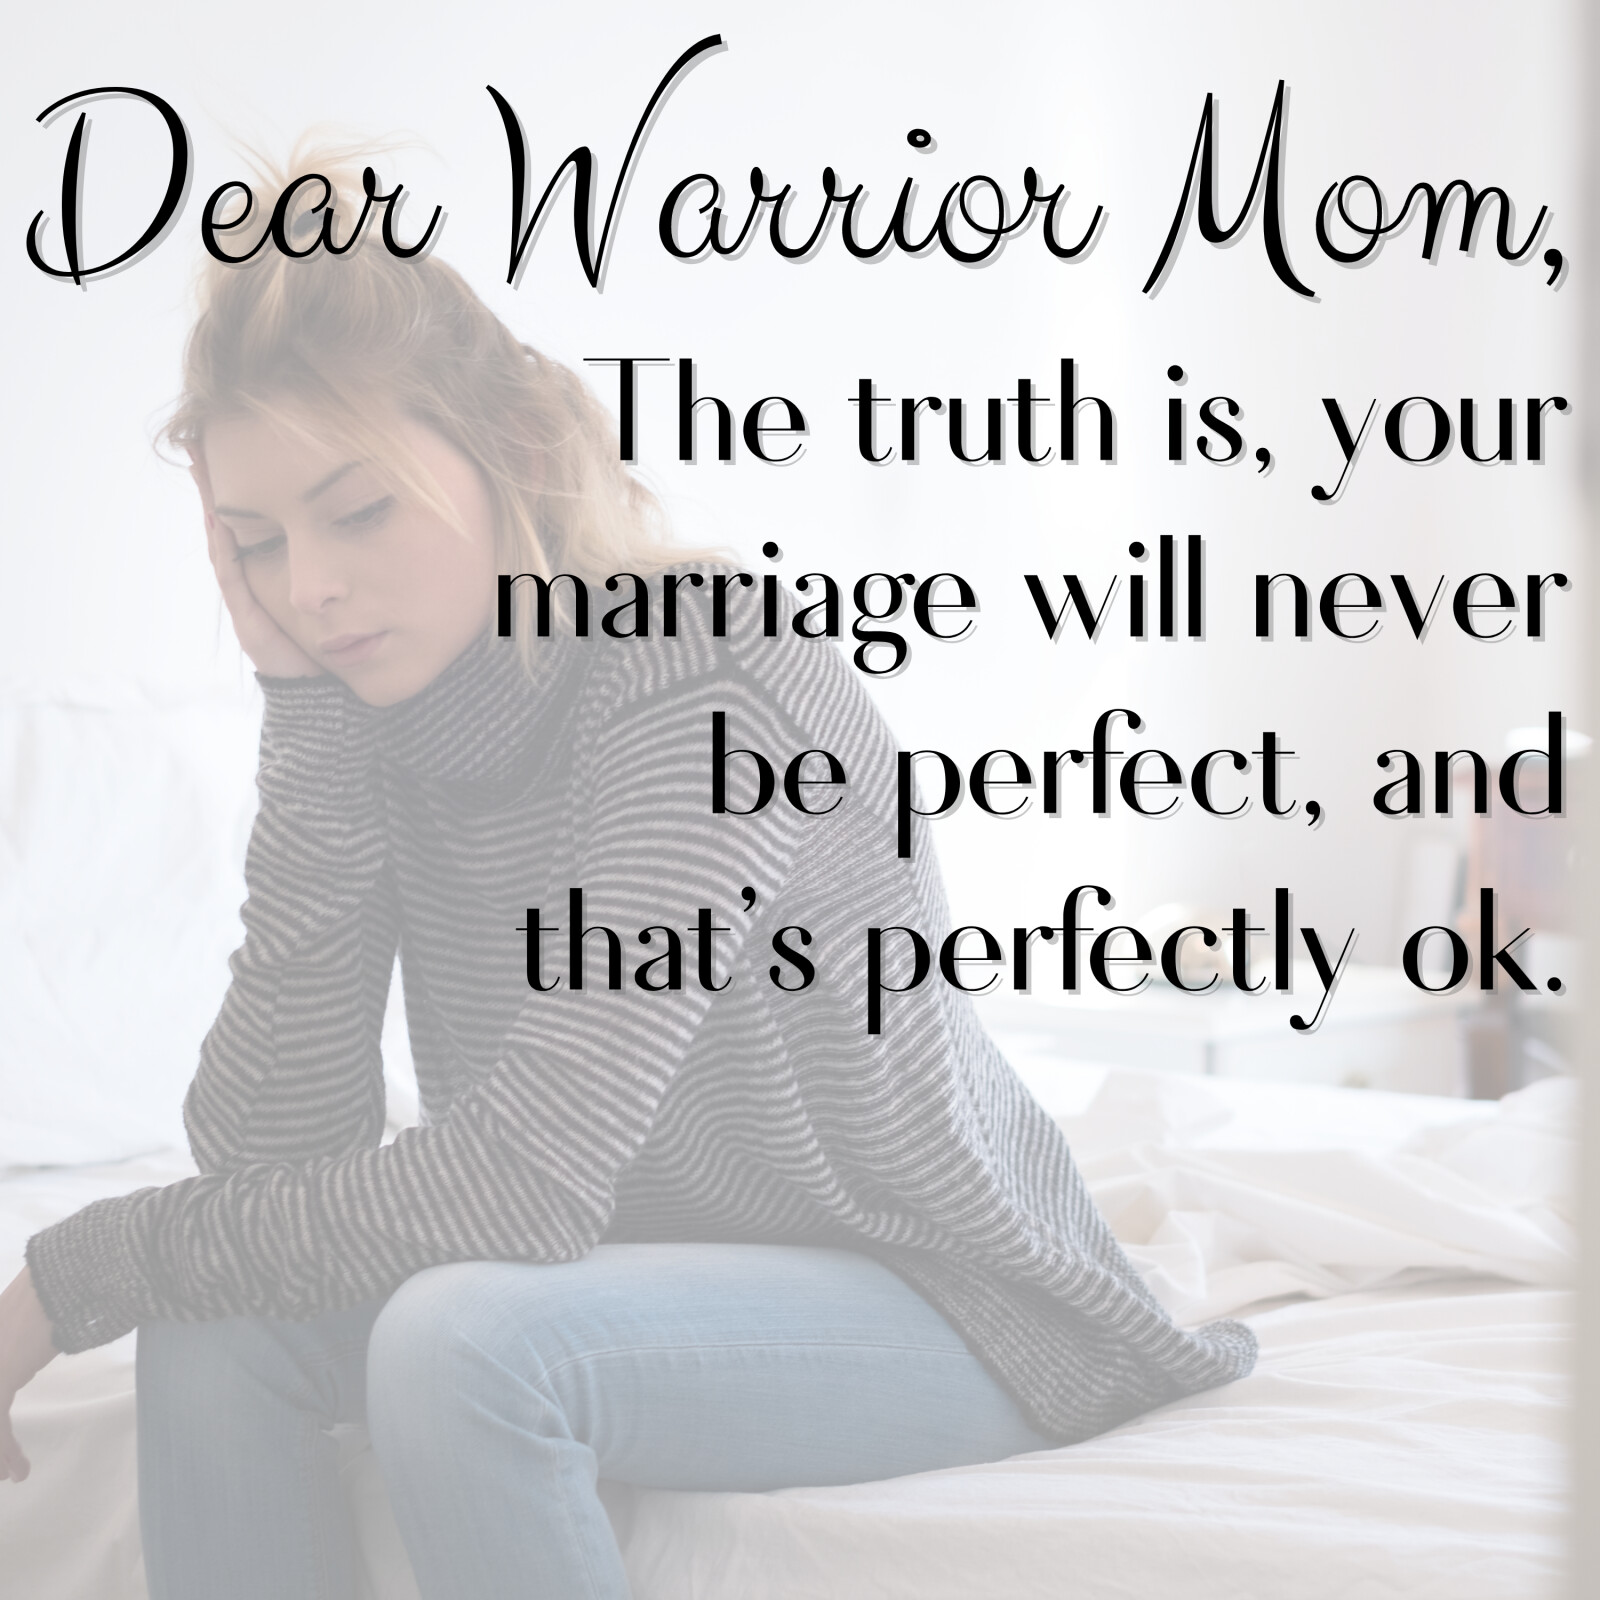 Dear Warrior Mom...